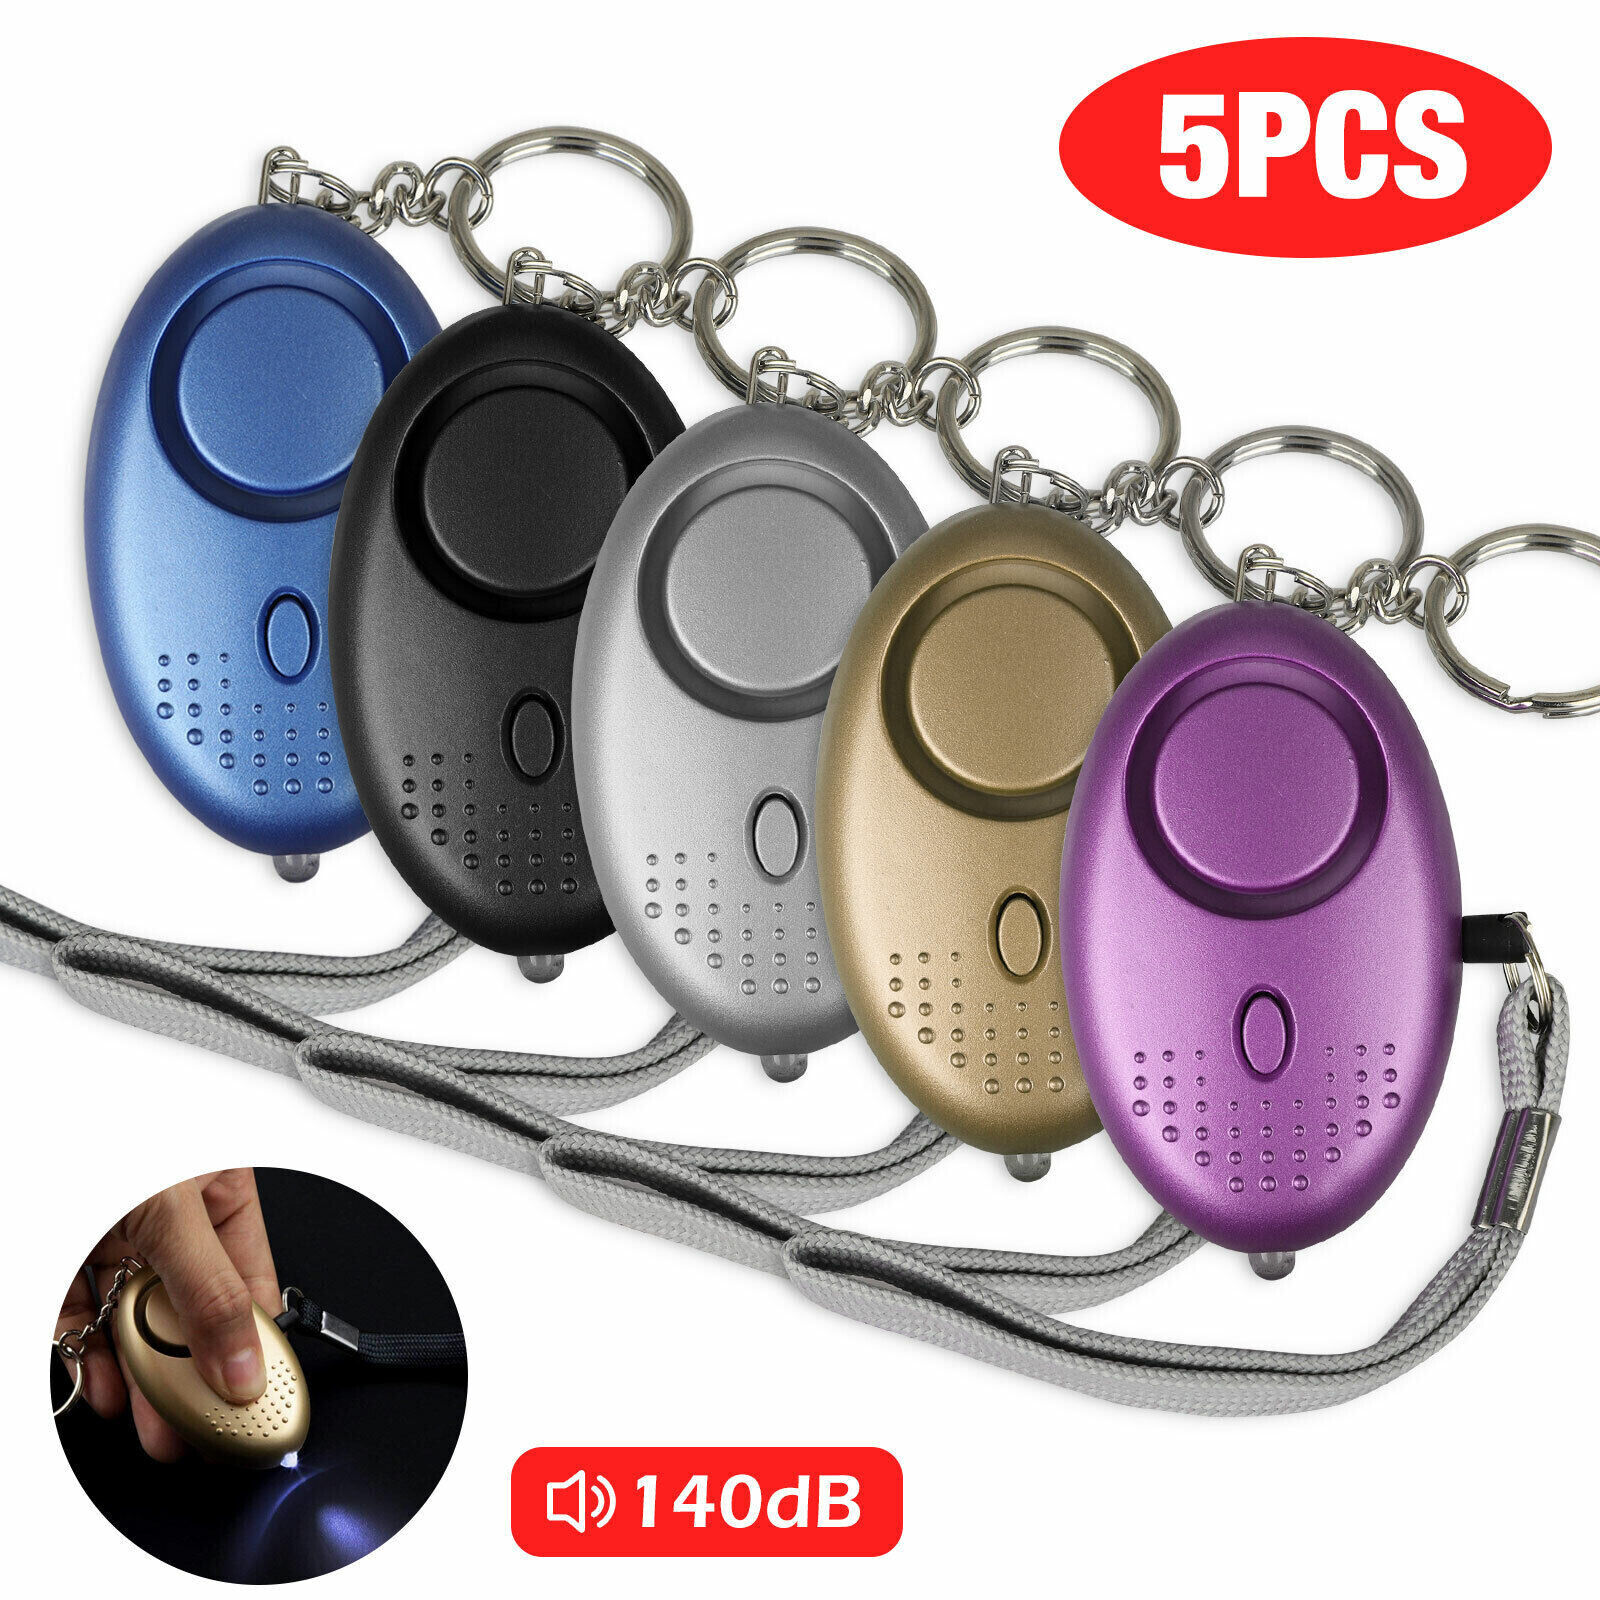 5Pcs Personal Safe Alarm Sound Keychain 140DB Emergency Women Safety LED Light Unbranded